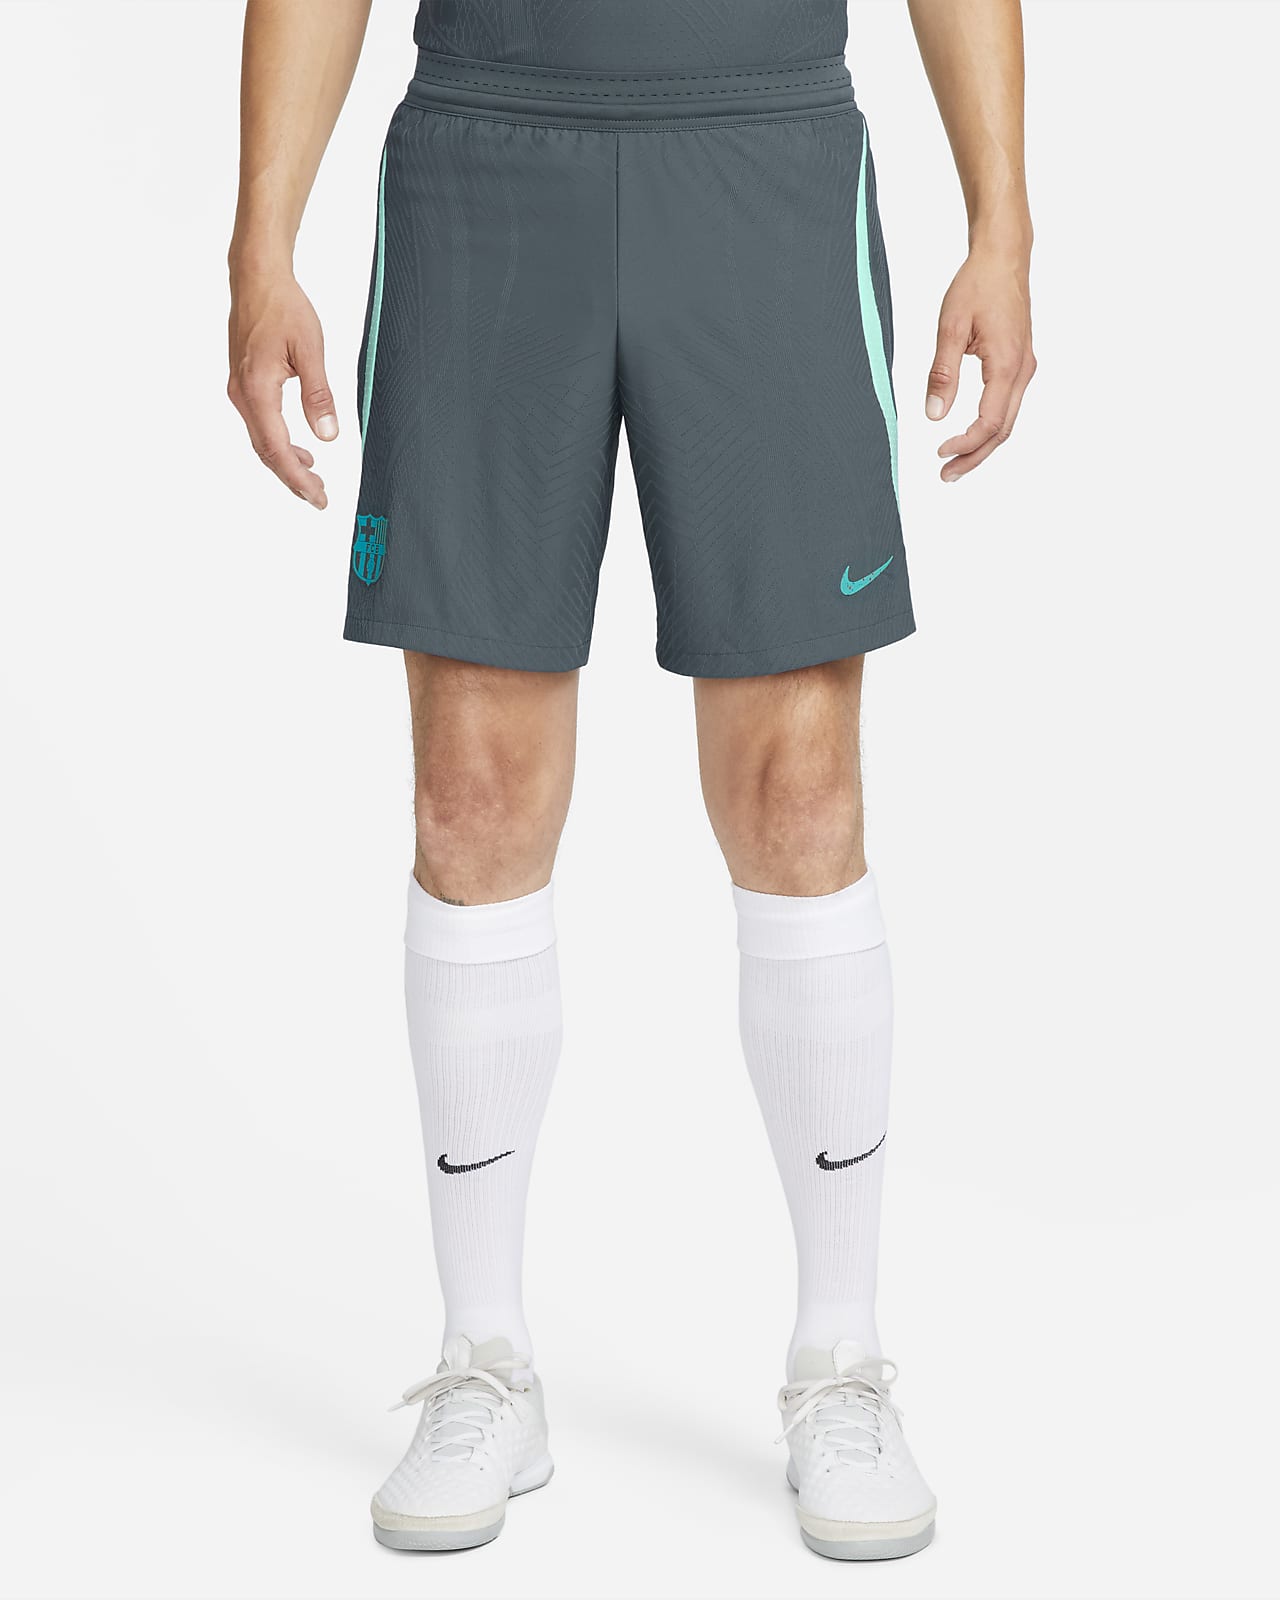 FC Barcelona Strike Elite Pantalons curts de teixit Knit Nike Dri-FIT ADV de futbol - Home